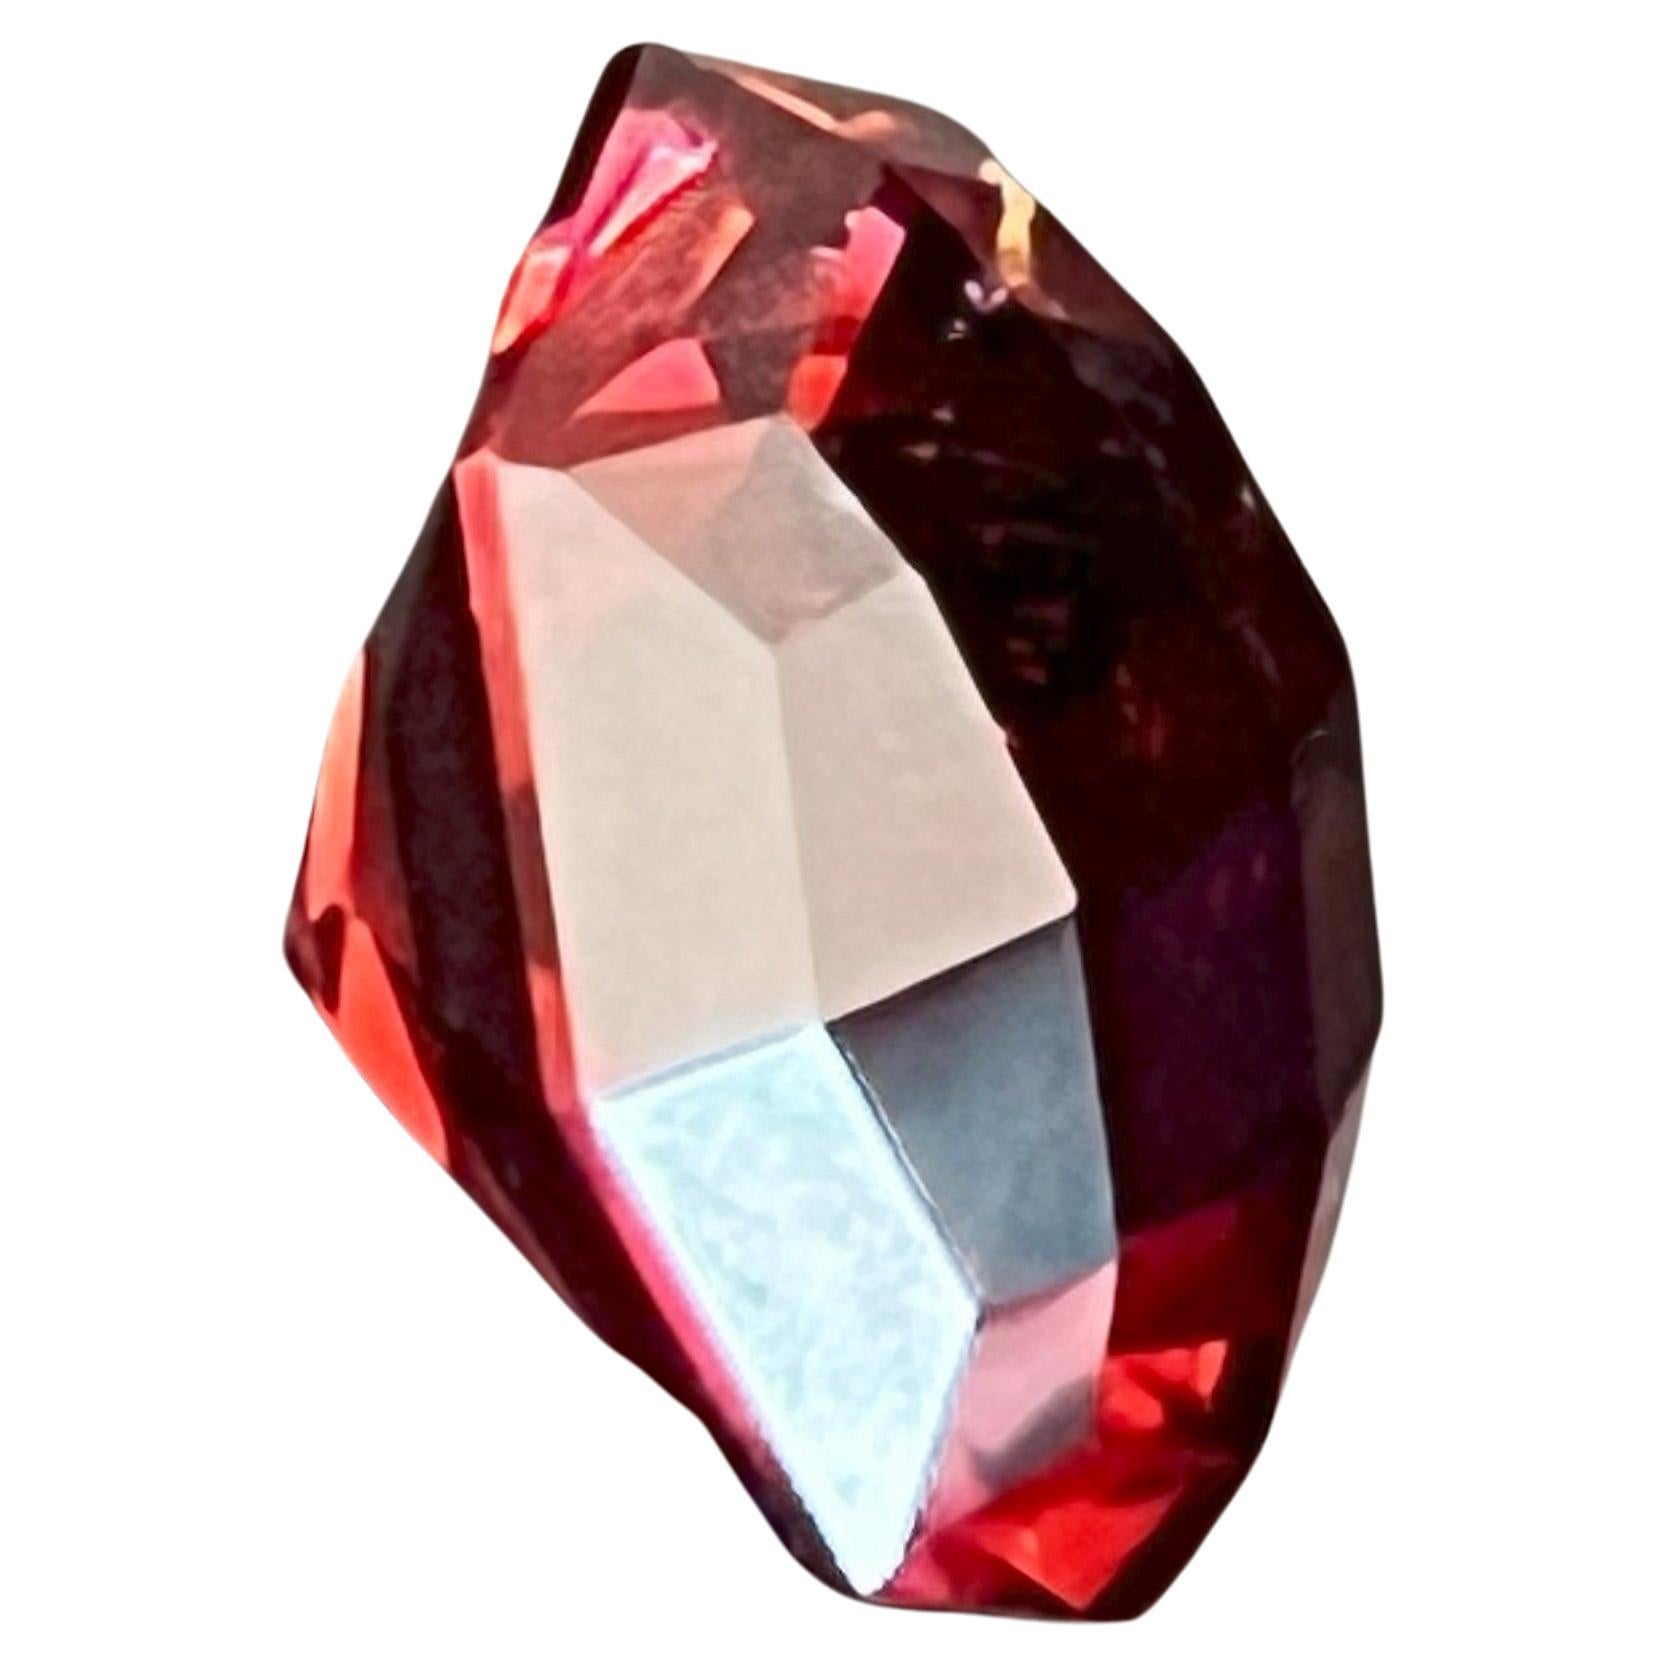 dark red gem stone